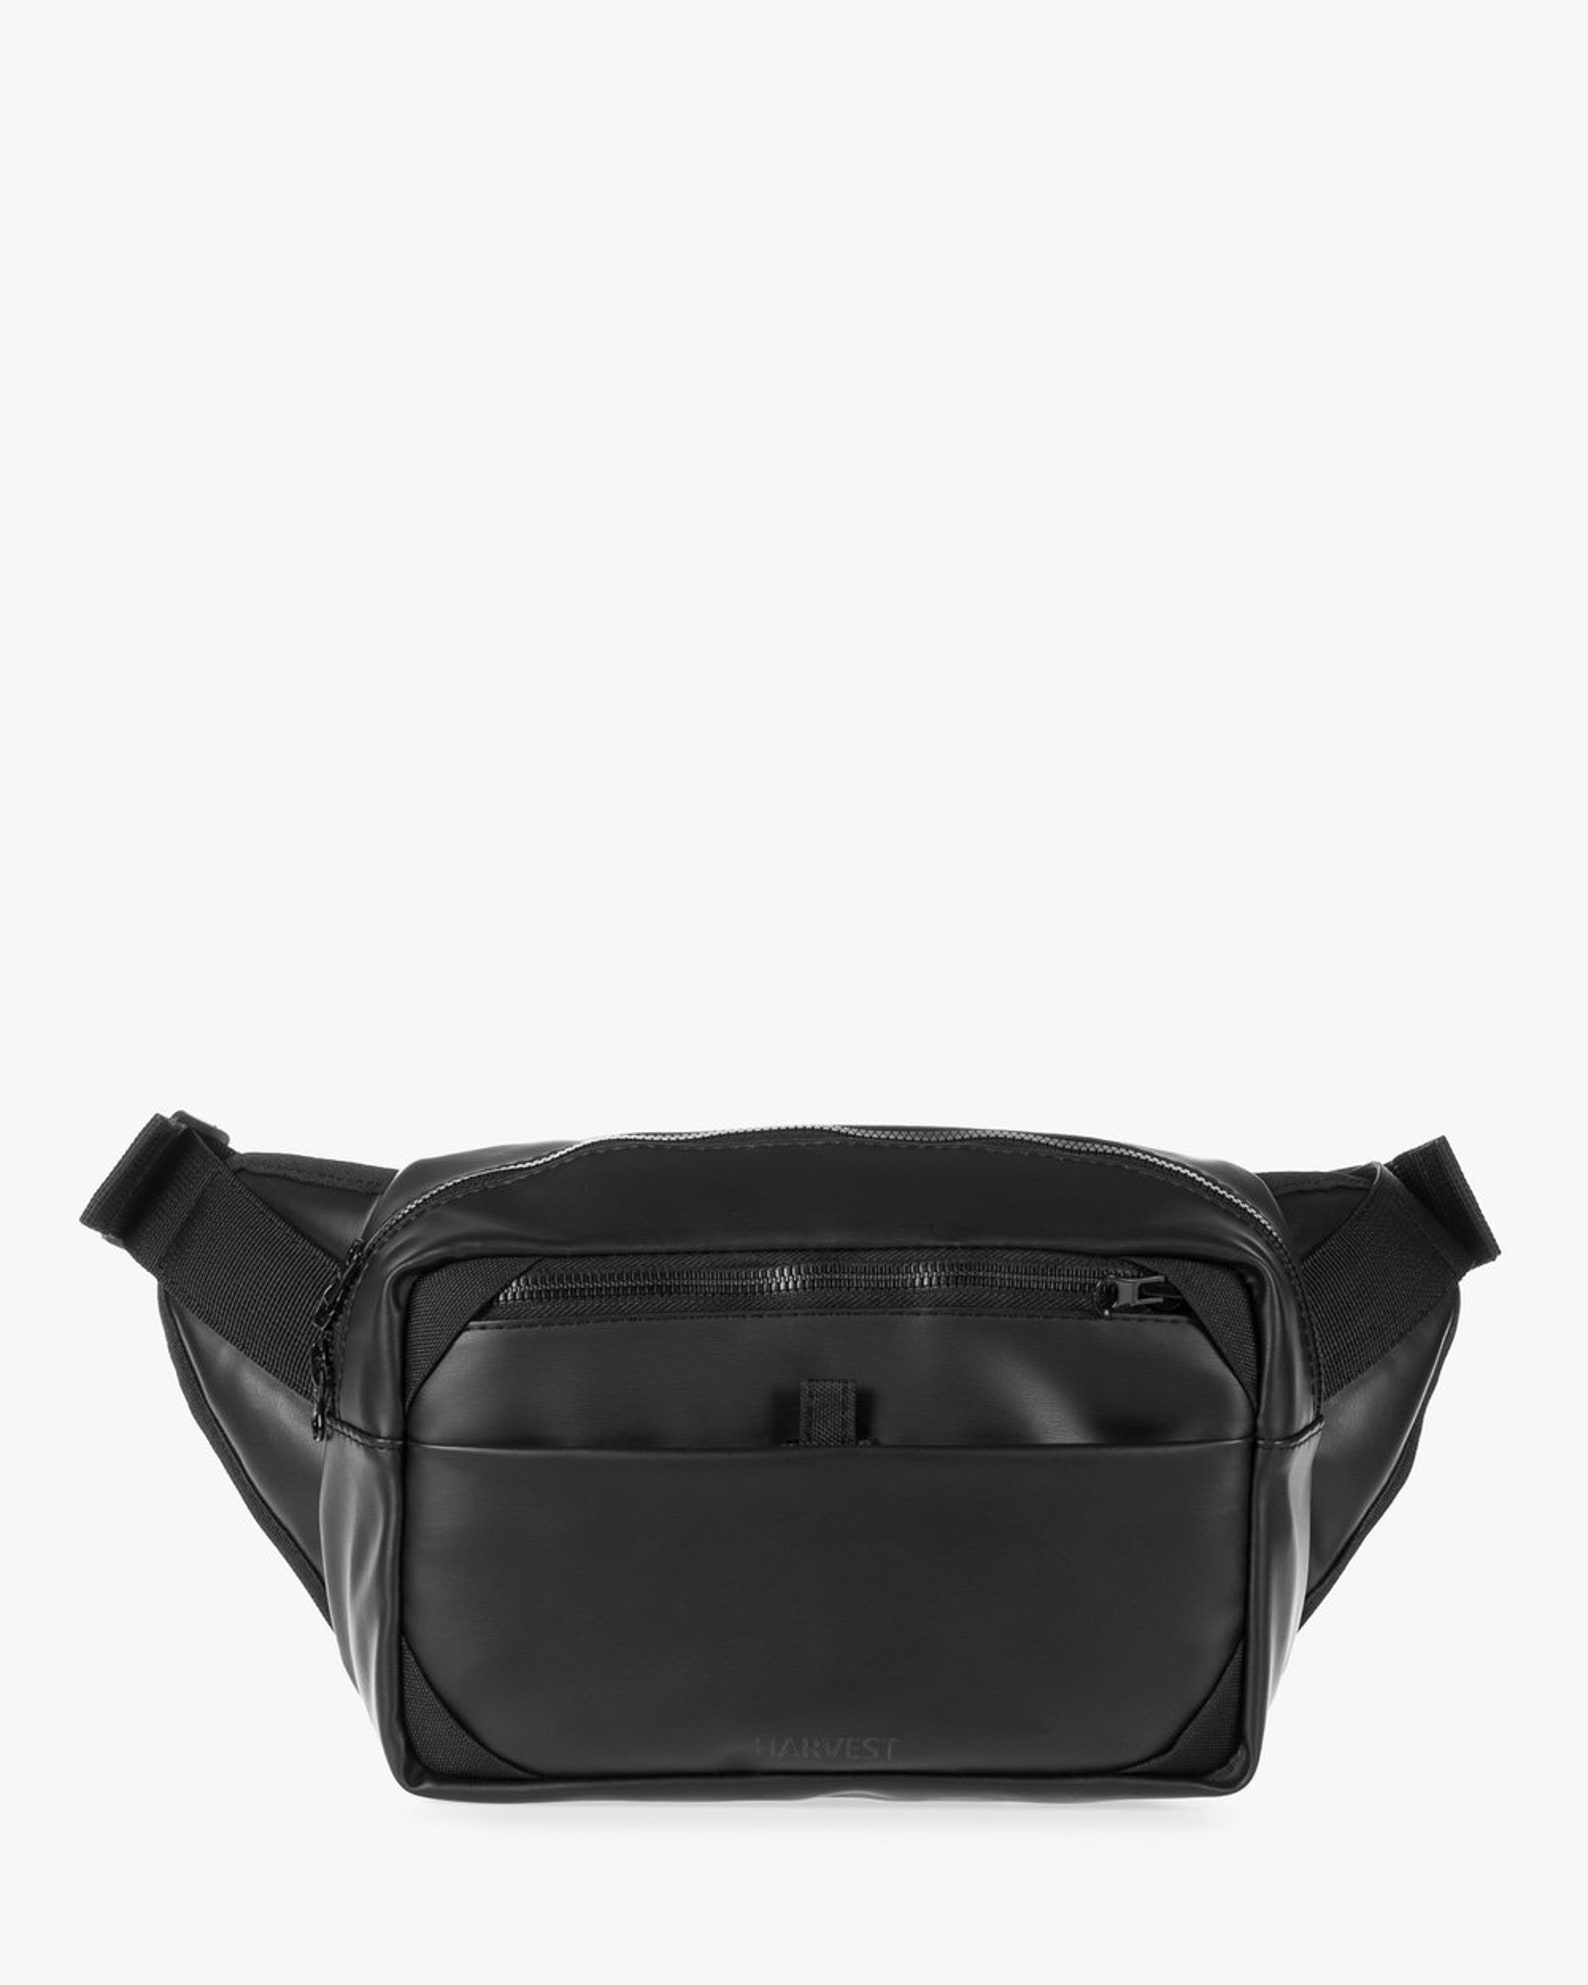 Black bum bag mens crossbody bag water resistant waist | Etsy